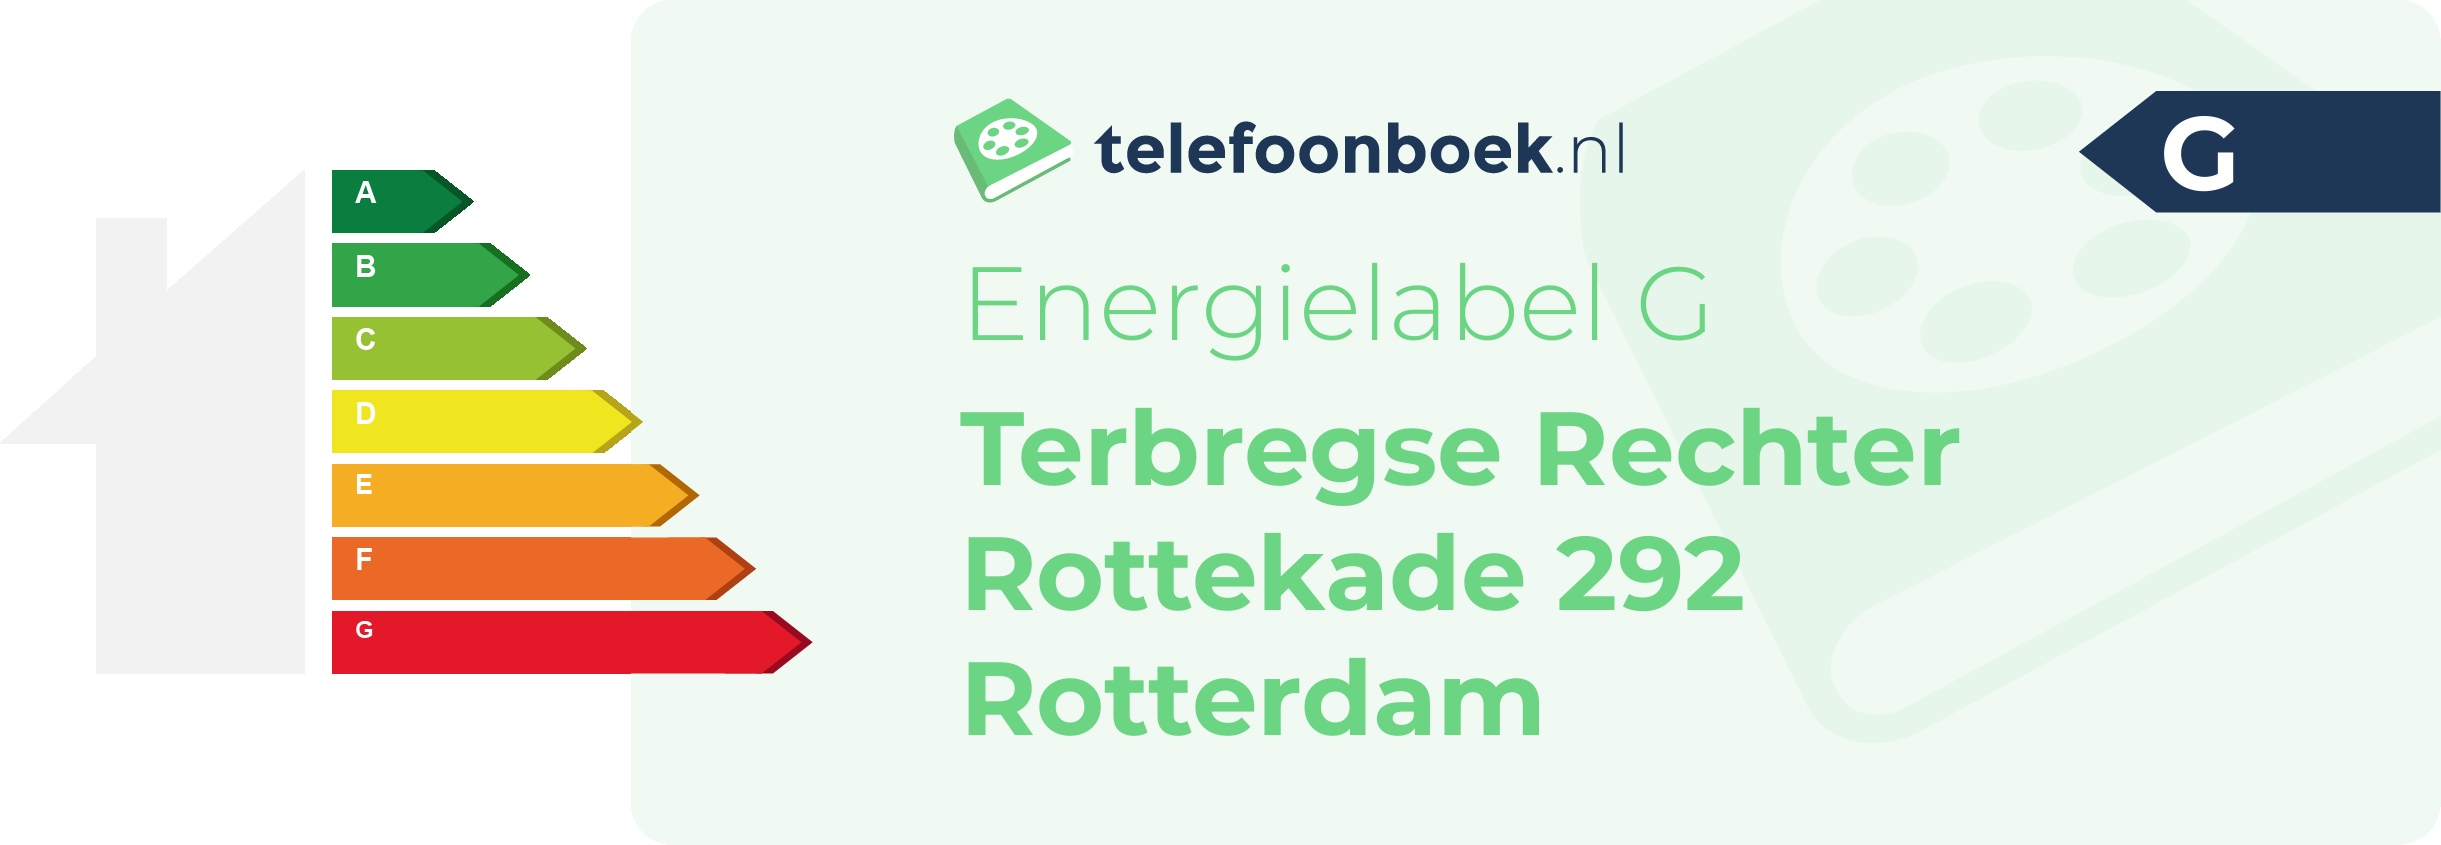 Energielabel Terbregse Rechter Rottekade 292 Rotterdam